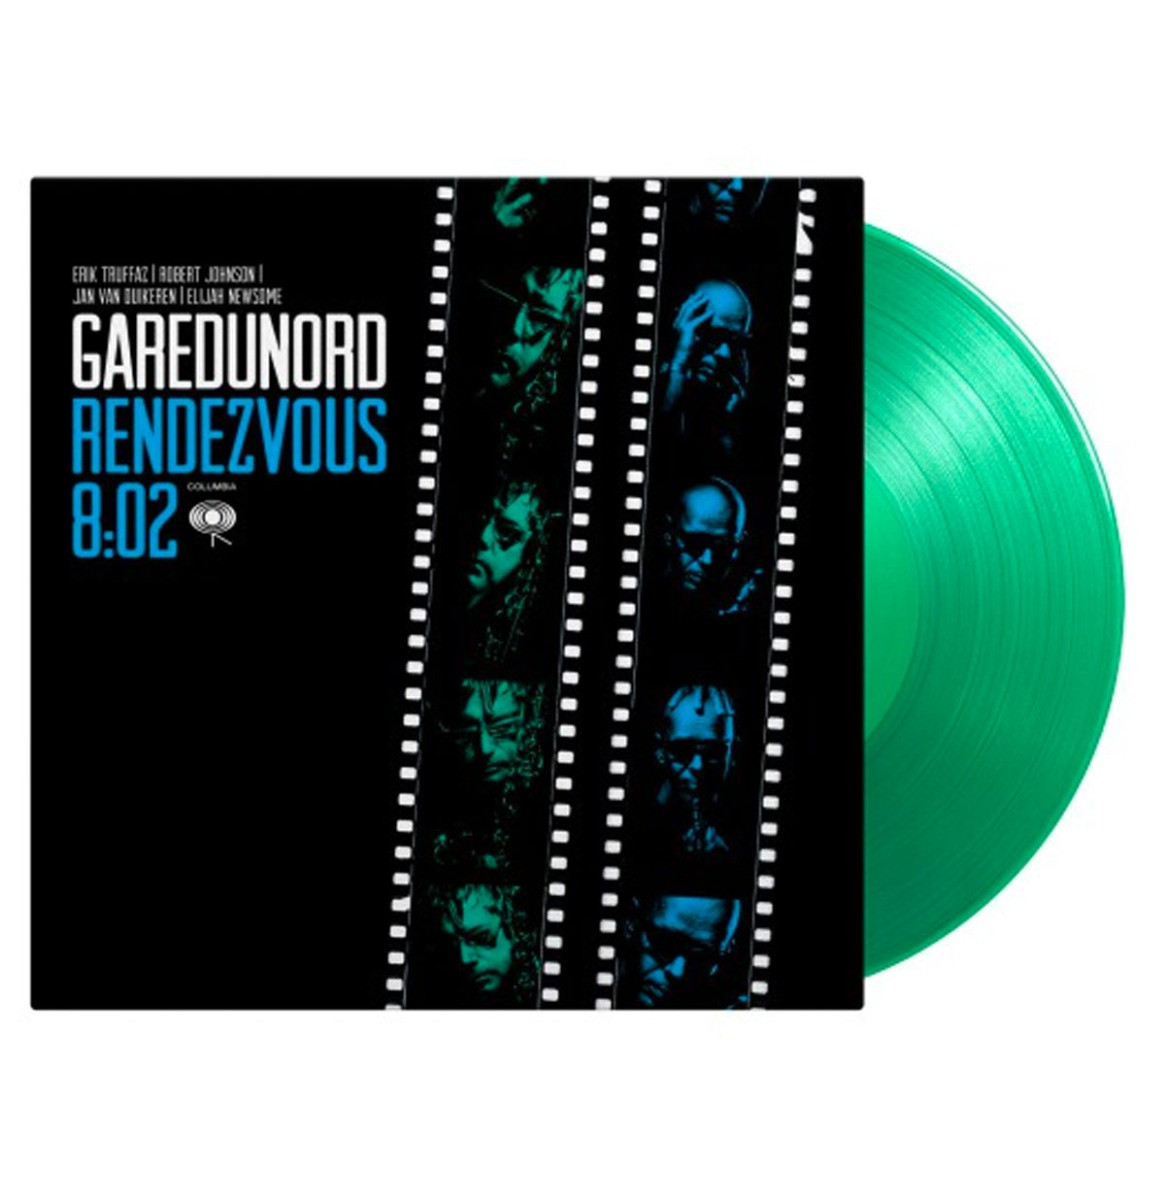 Gare Du Nord - Rendezvous 8:02 (Gekleurd Vinyl) LP